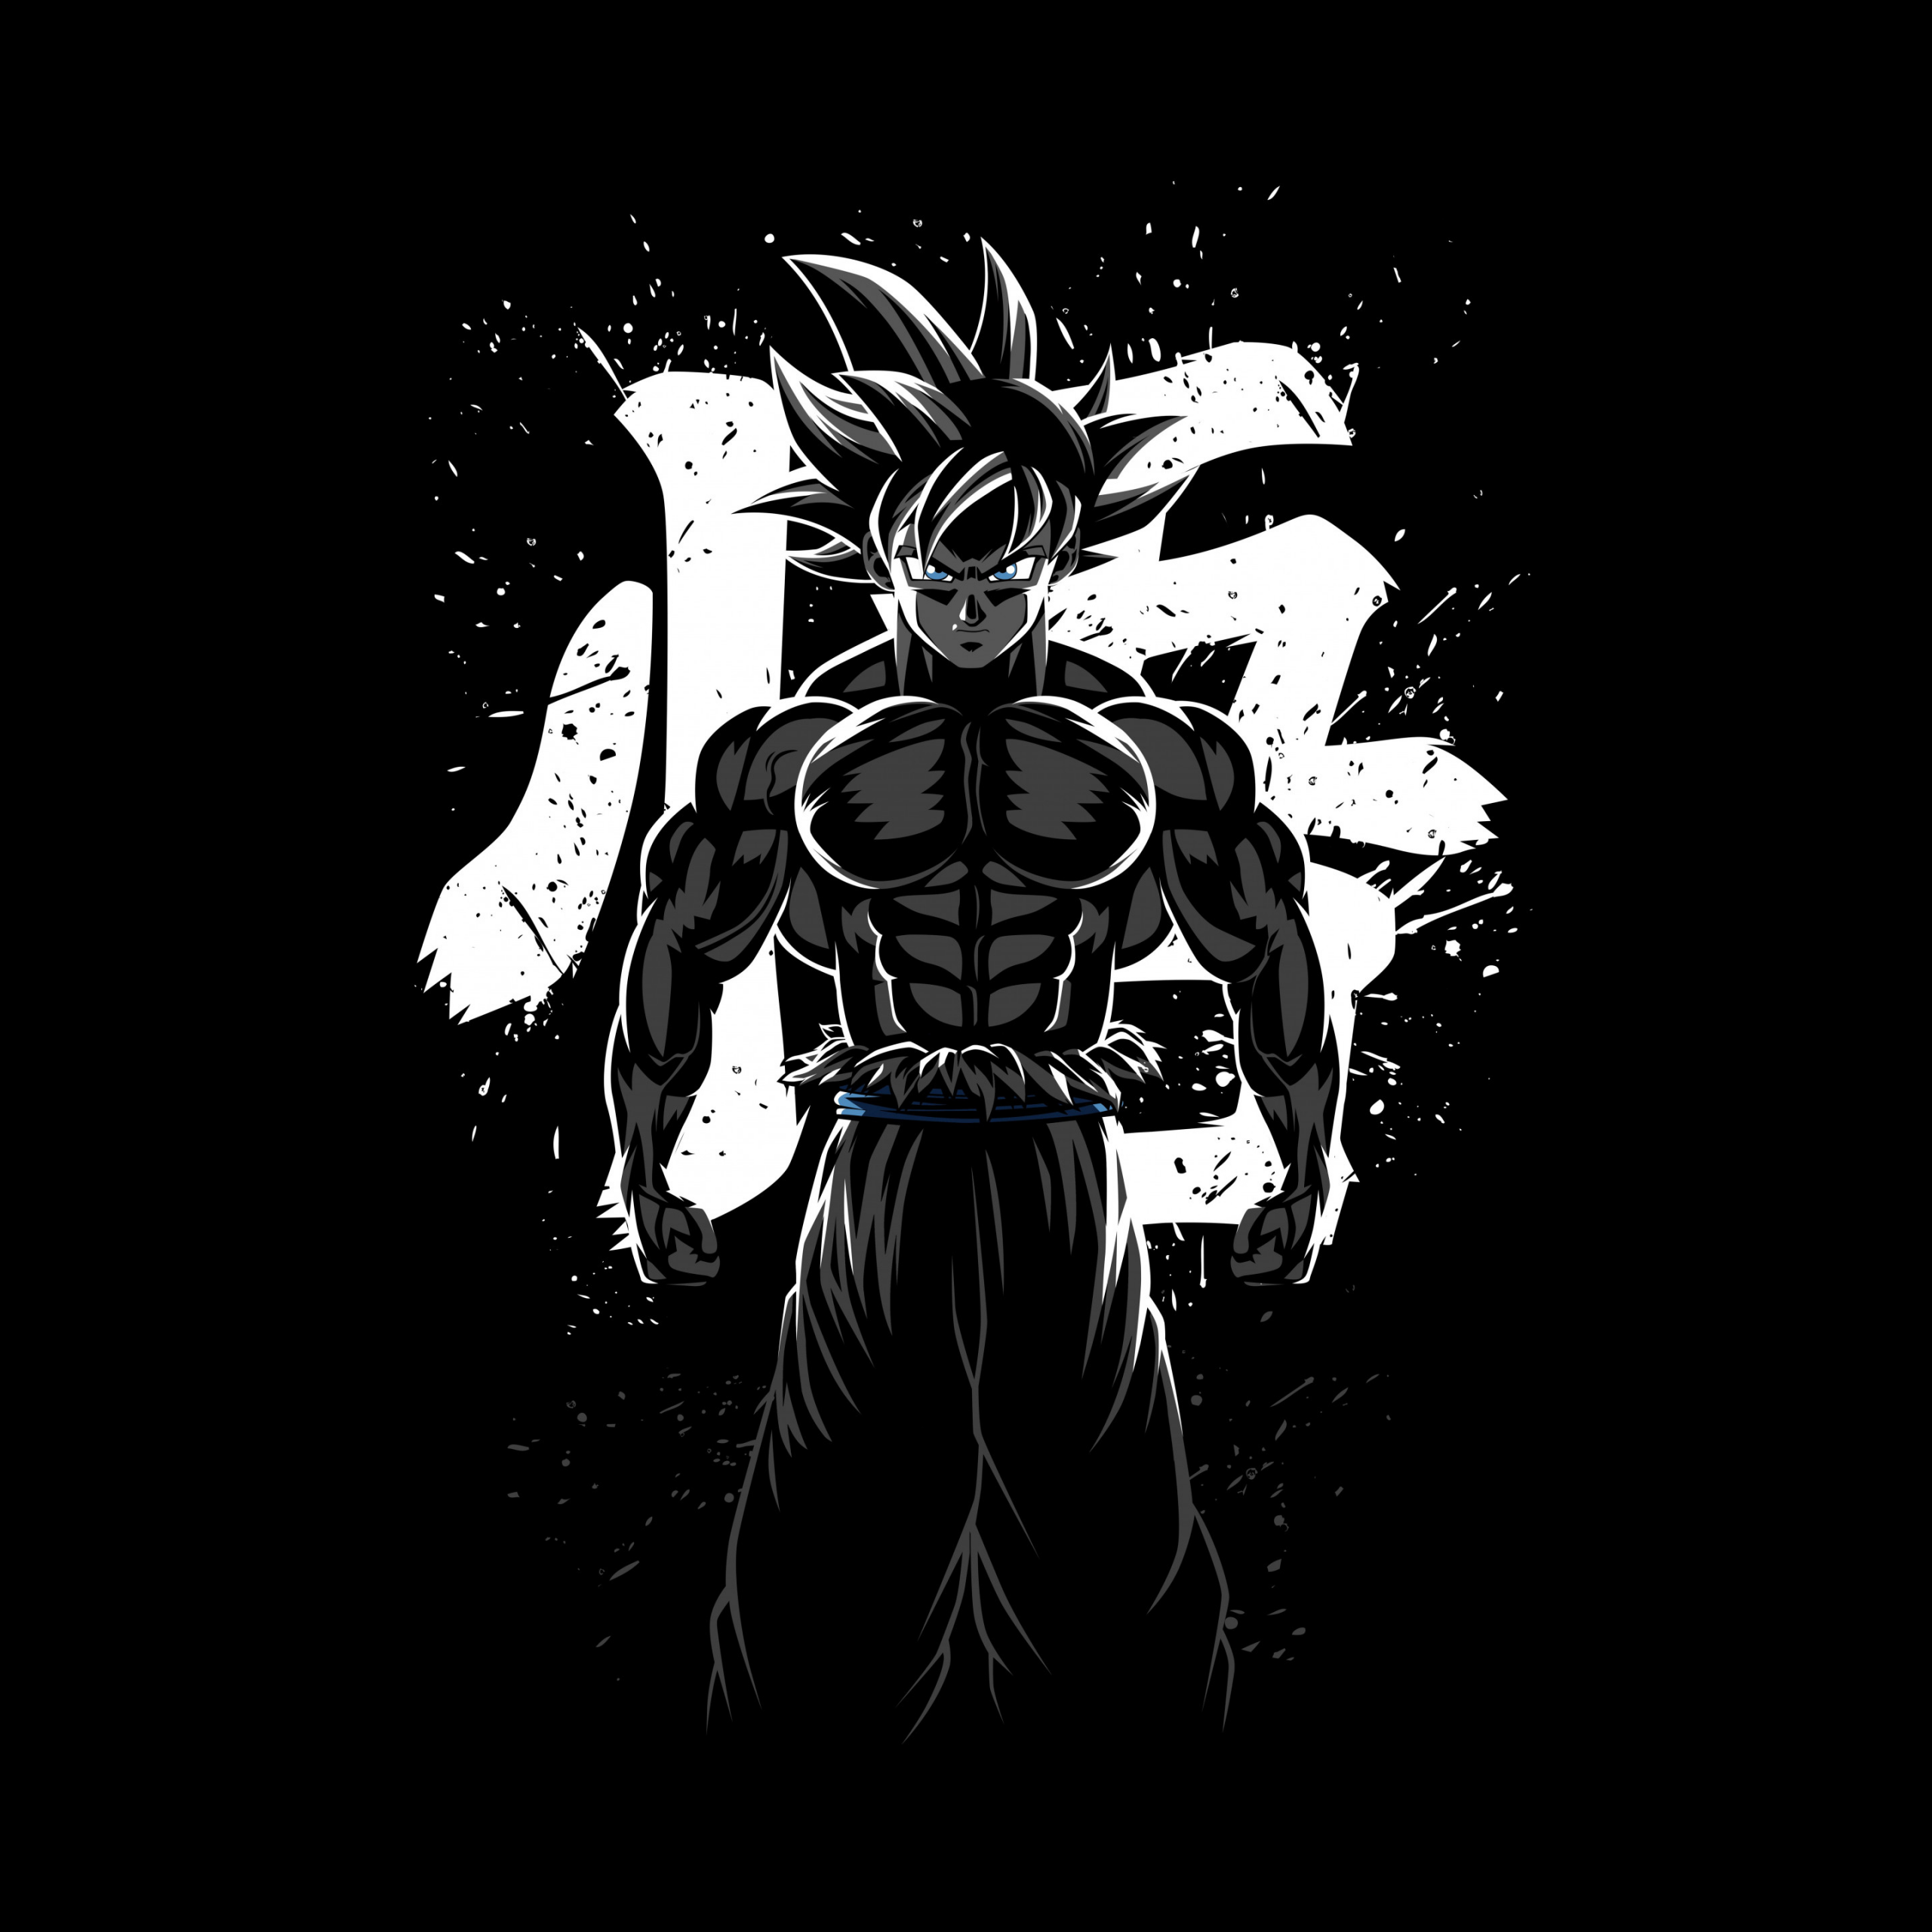 Goku Musculoso Wallpaper 4K, Dragon Ball Z, AMOLED, Black/Dark, #4945